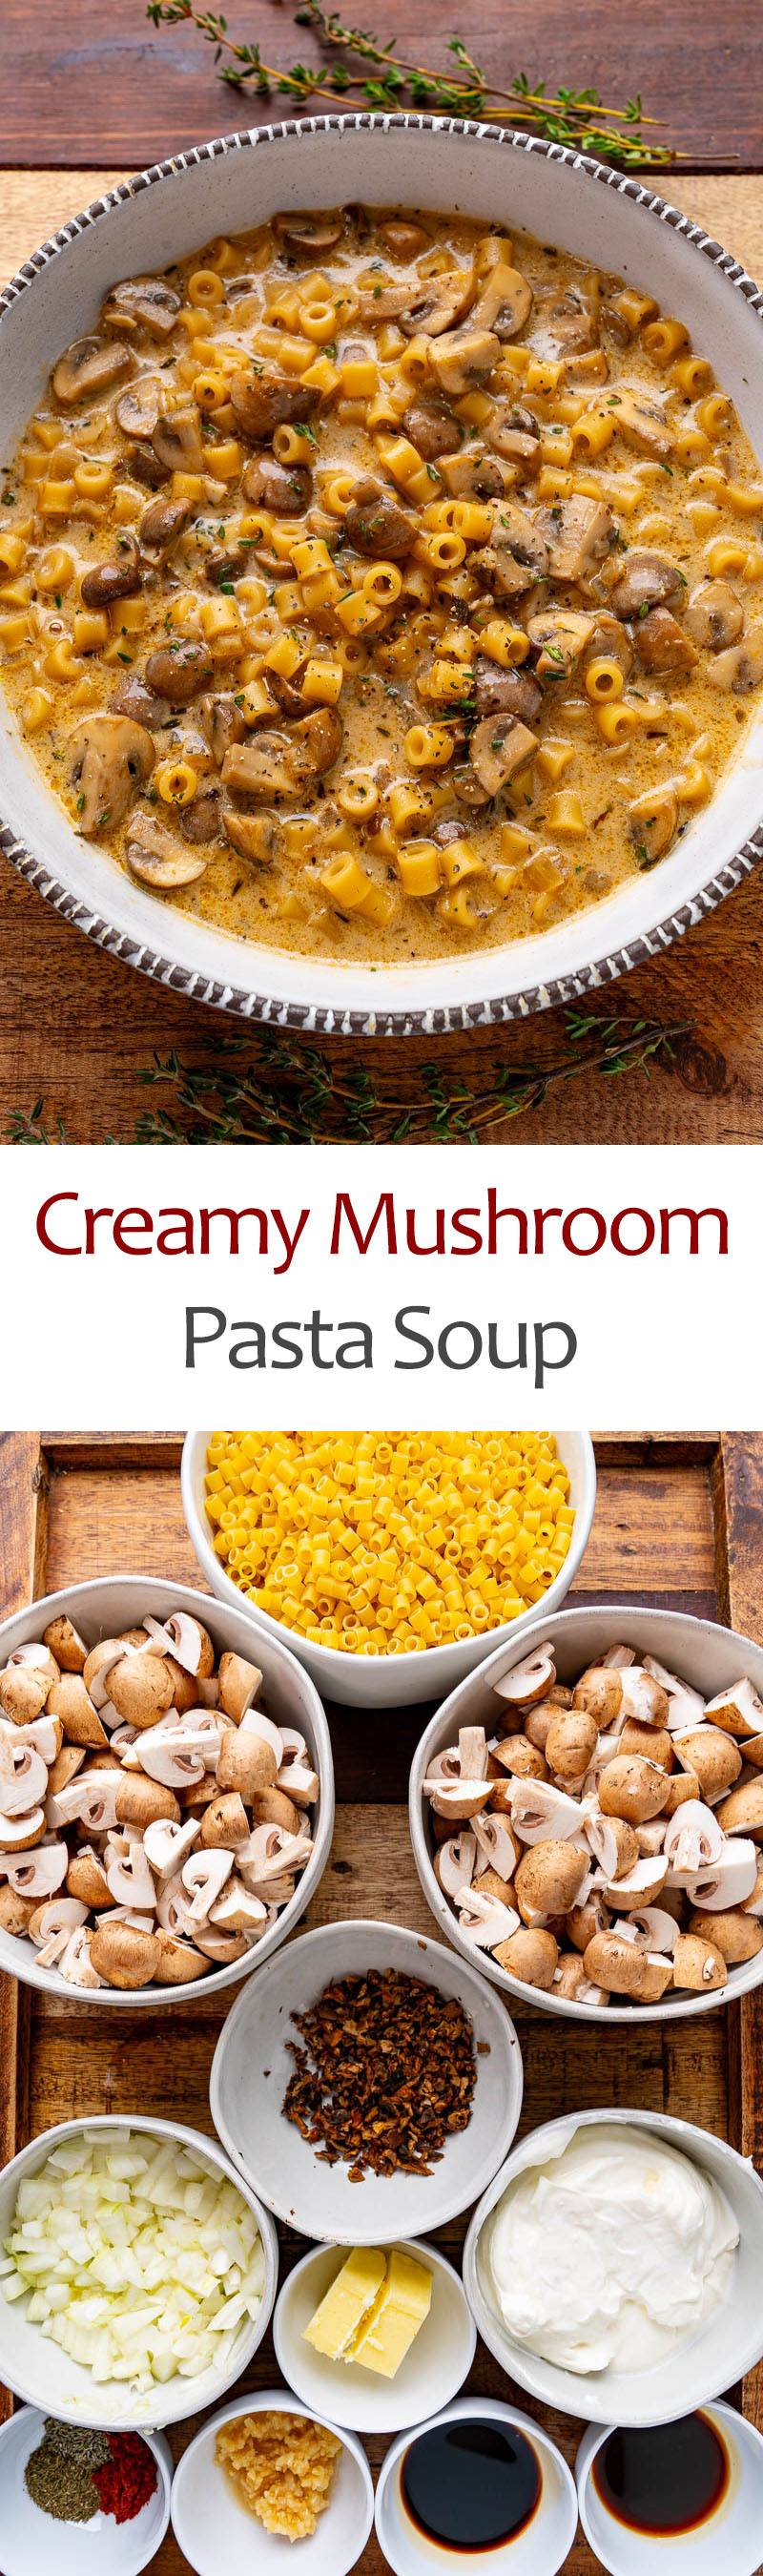 Creamy Mushroom Pasta Soup